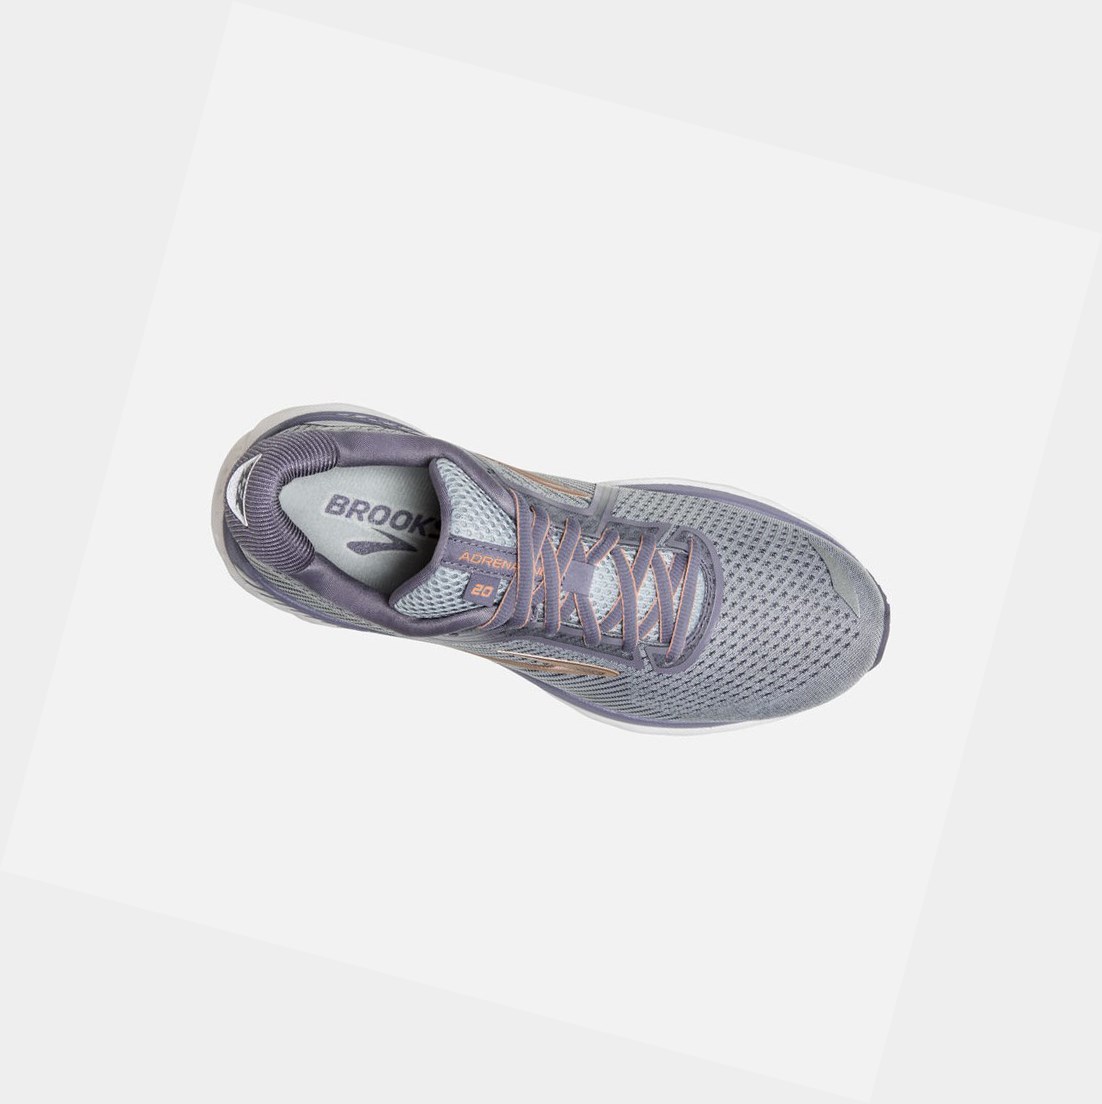 Brooks Adrenaline GTS 20 Women's Walking Shoes Grey / Pale Peach / White | XYQG-83901